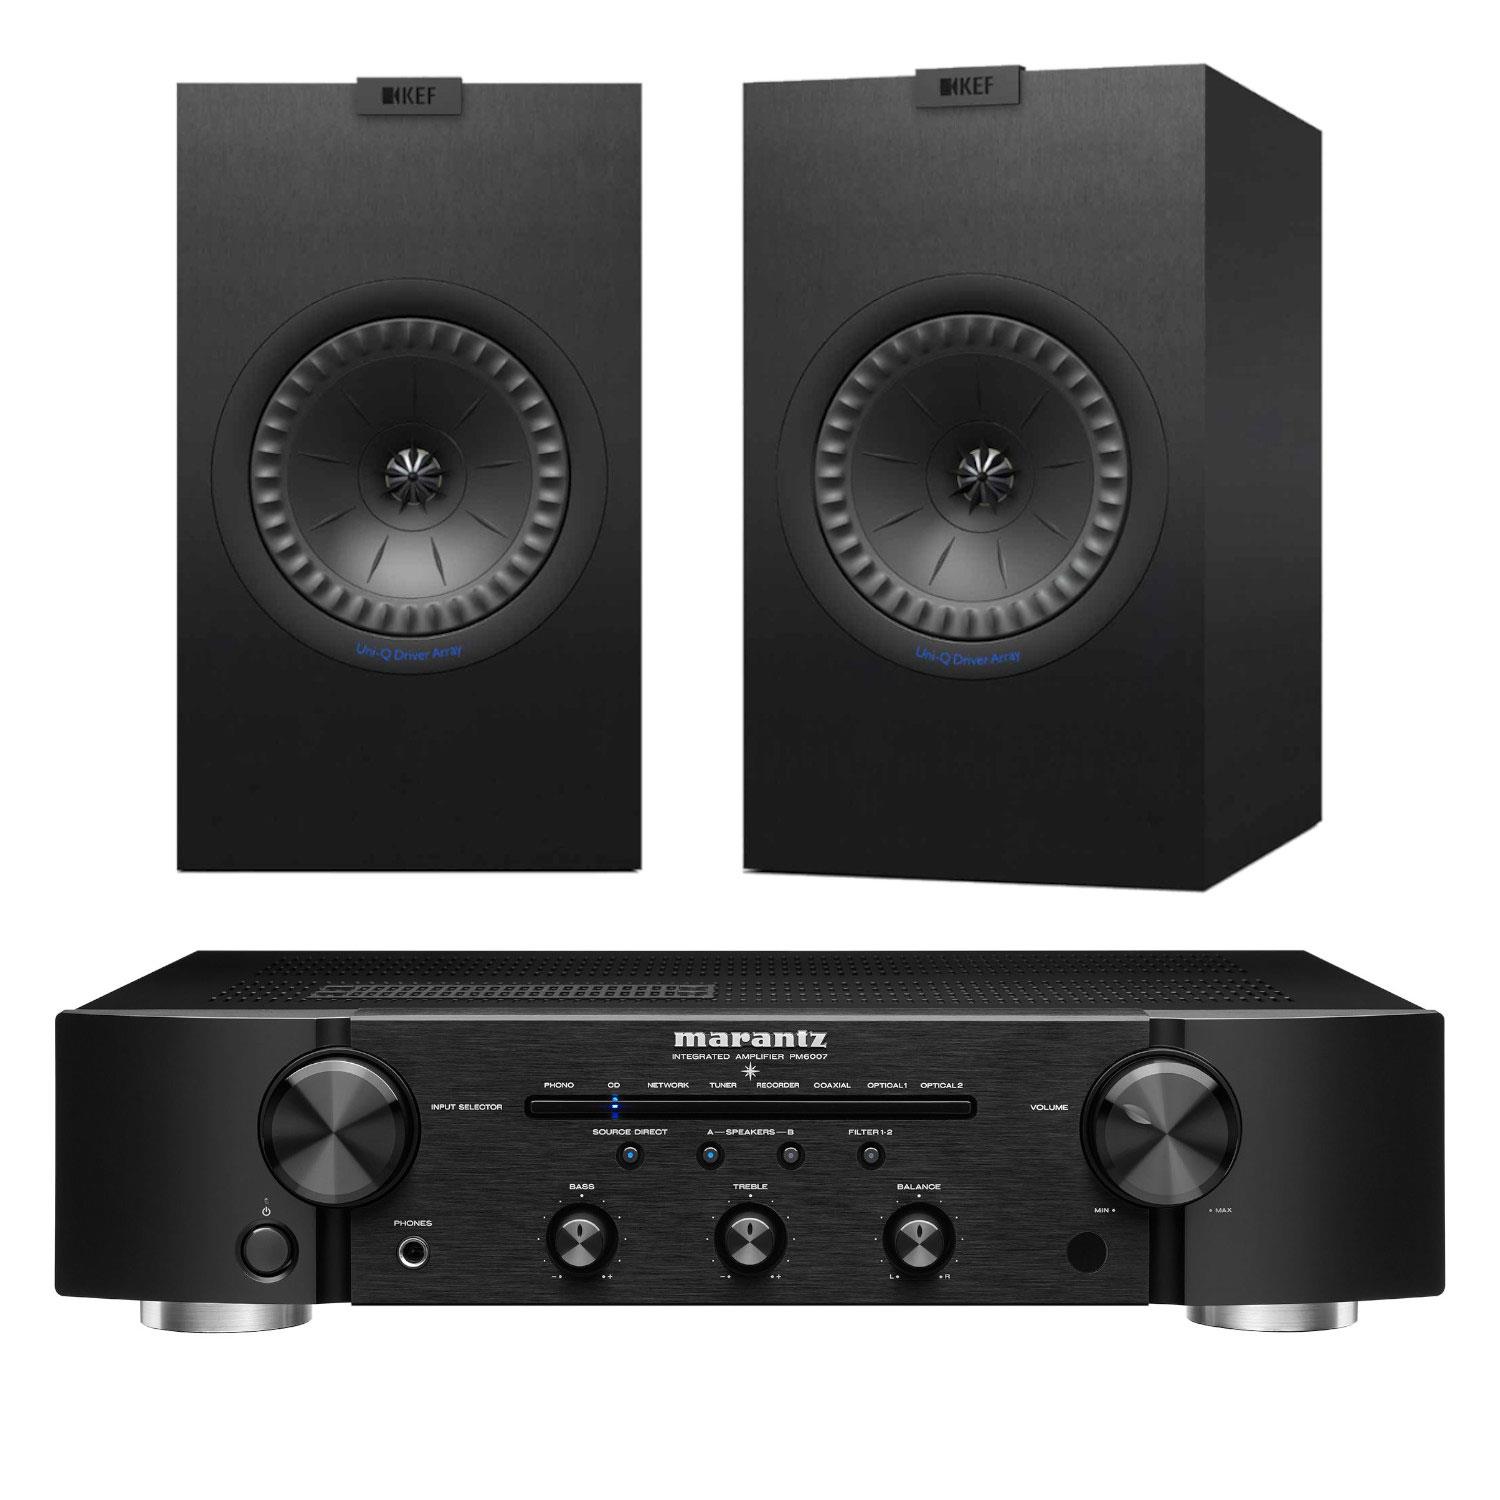 Sevenoaks Sound and Vision - Marantz PM6007 Amplifier KEF Q350 Speakers